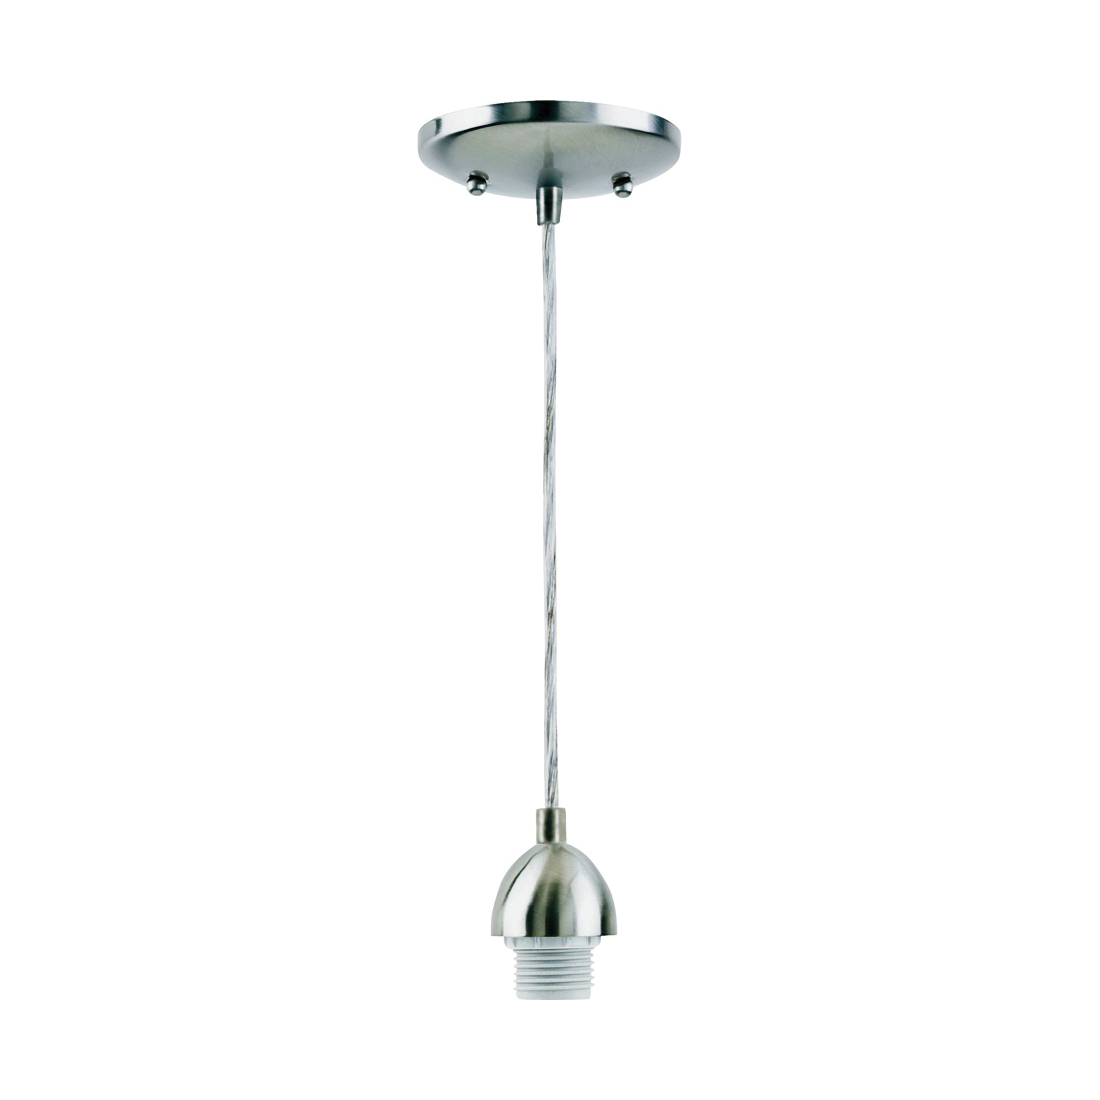 7028400 Mini Pendant Light Fixture, 1-Lamp, Incandescent Lamp, Brushed Nickel Fixture